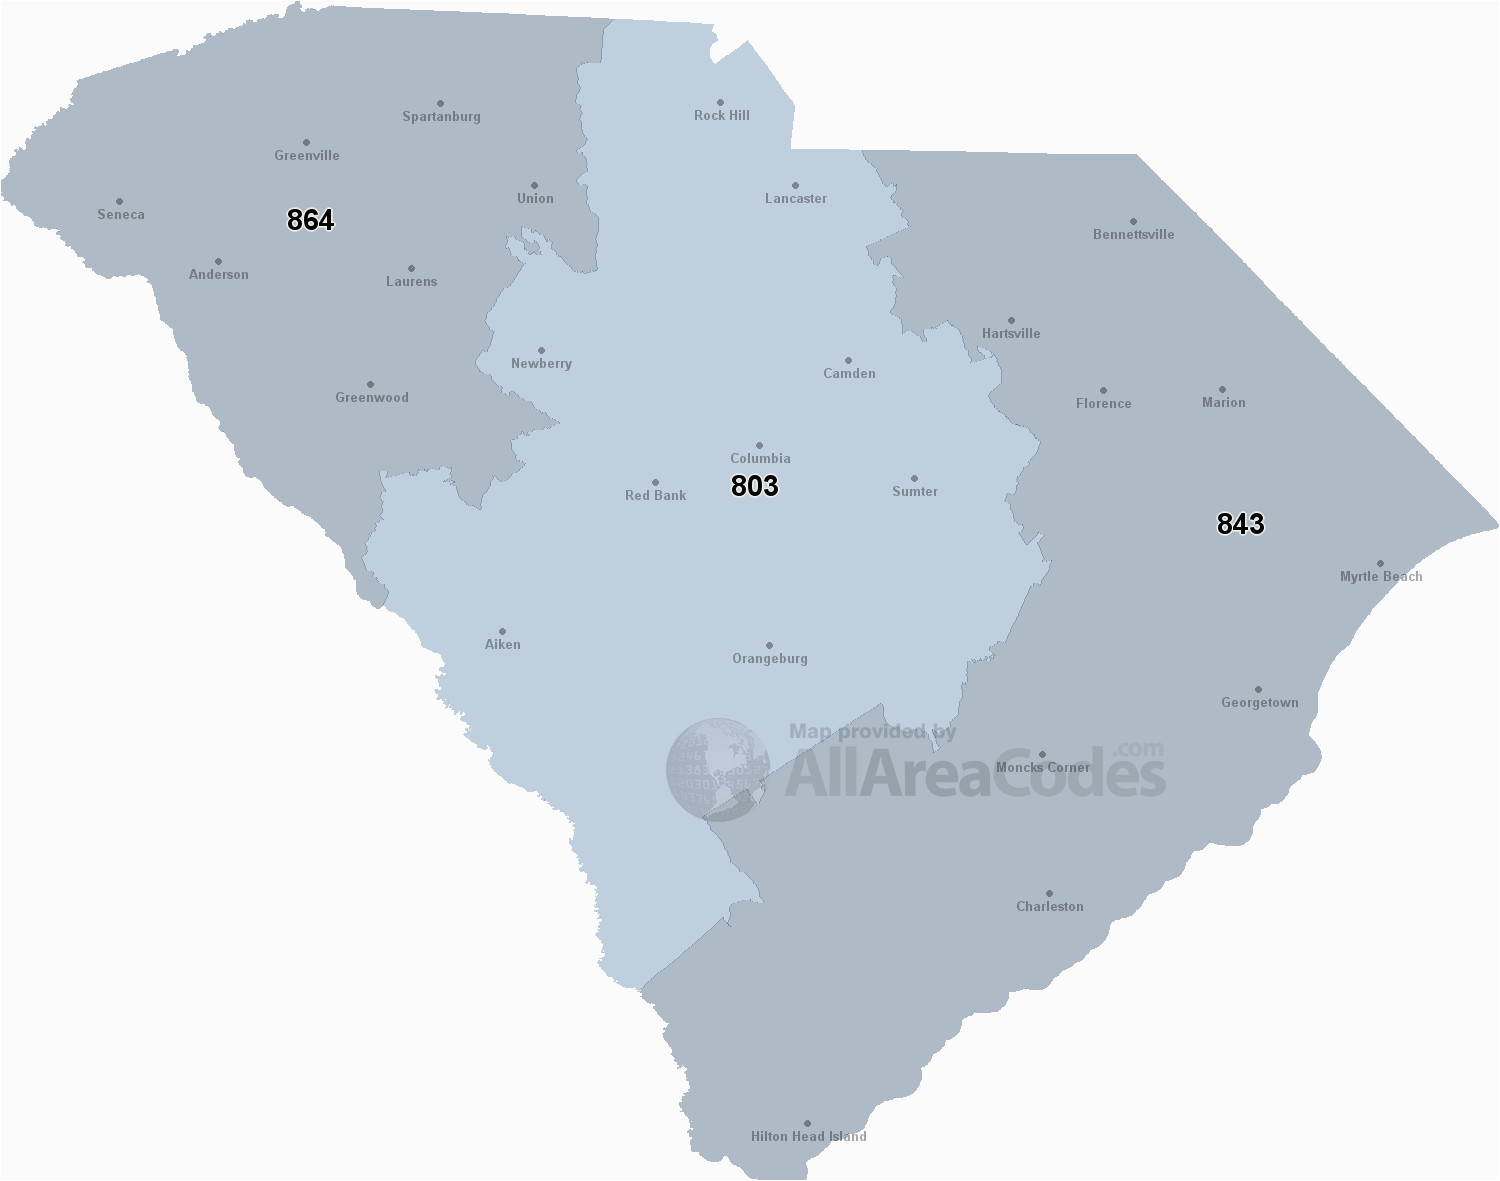 North Carolina area Code Map south Carolina area Codes Map List and Phone Lookup